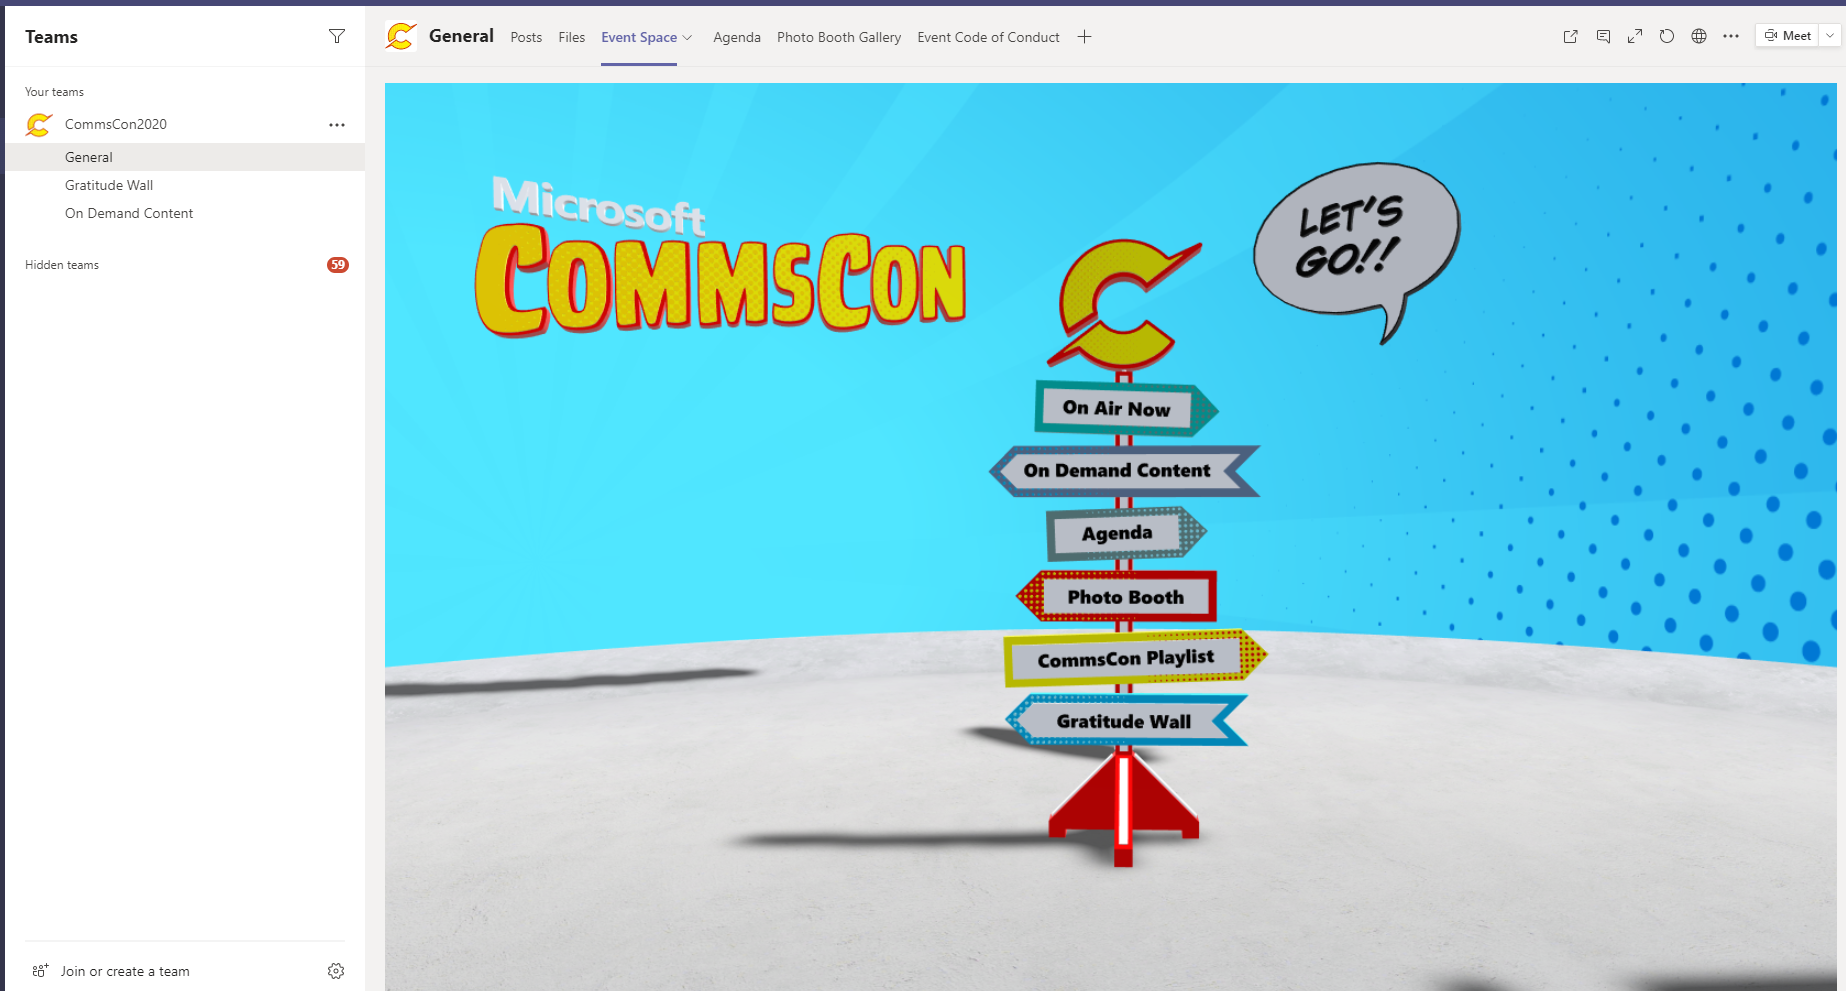 Screenshot of Microsoft CommsCon slide/page.